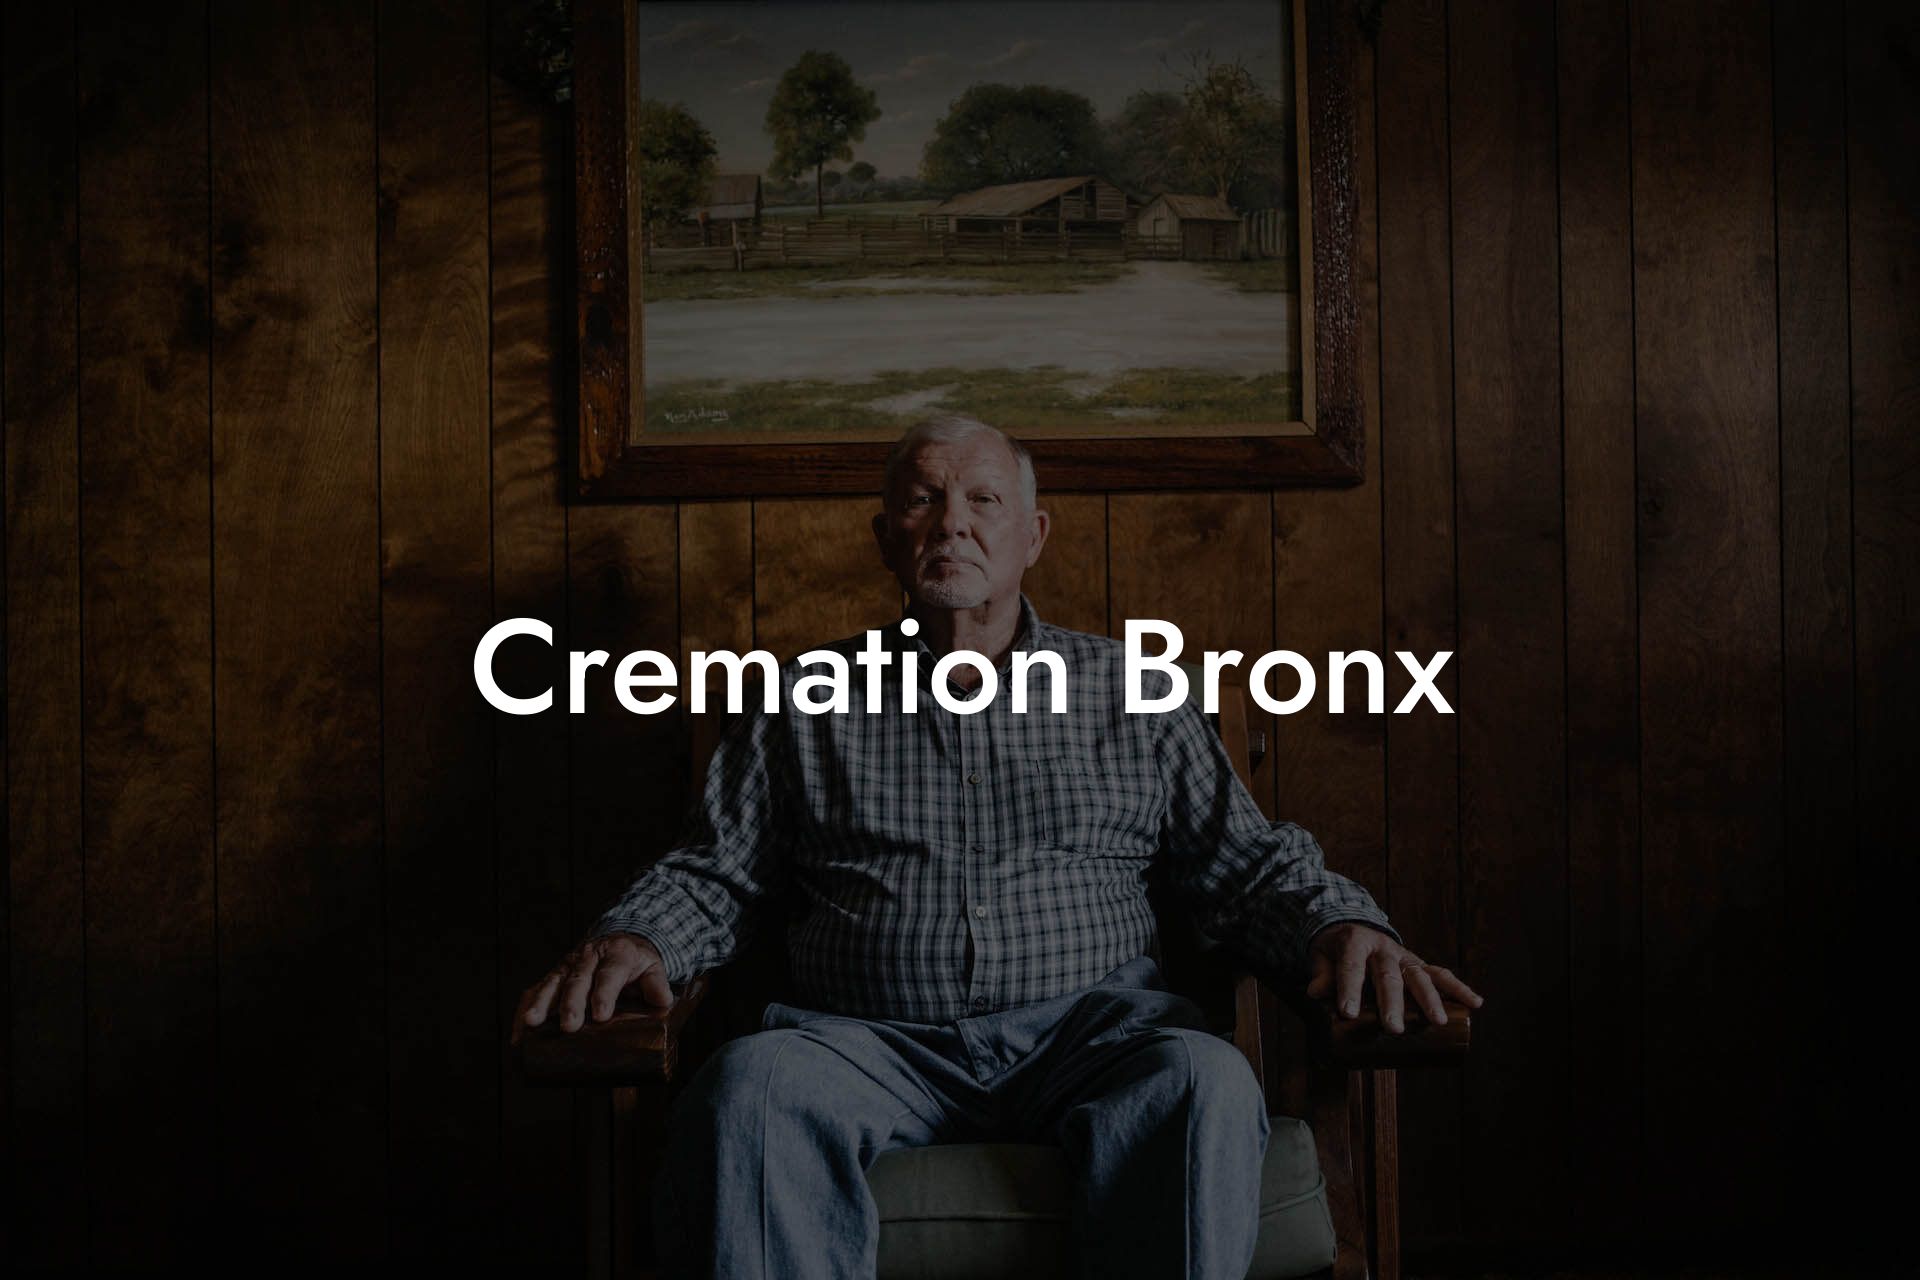 Cremation Bronx